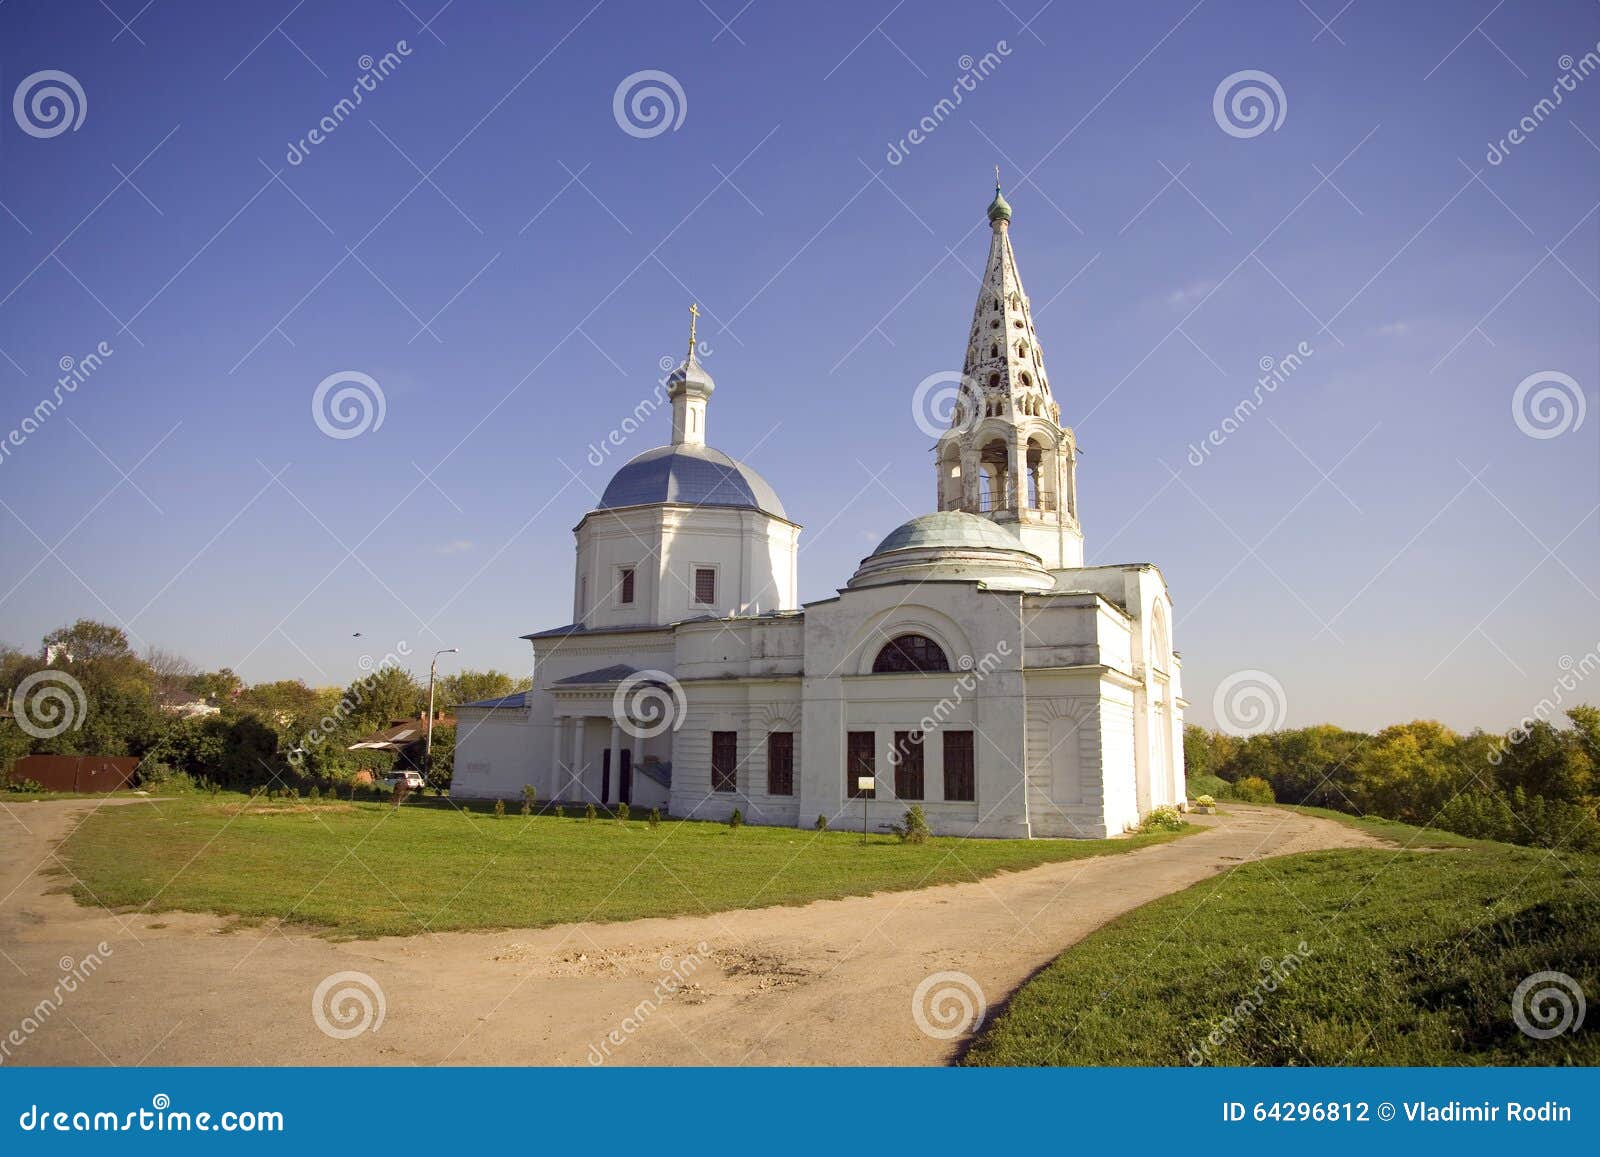 serpukhov trinity cathedral orthodox classicism empire baroque